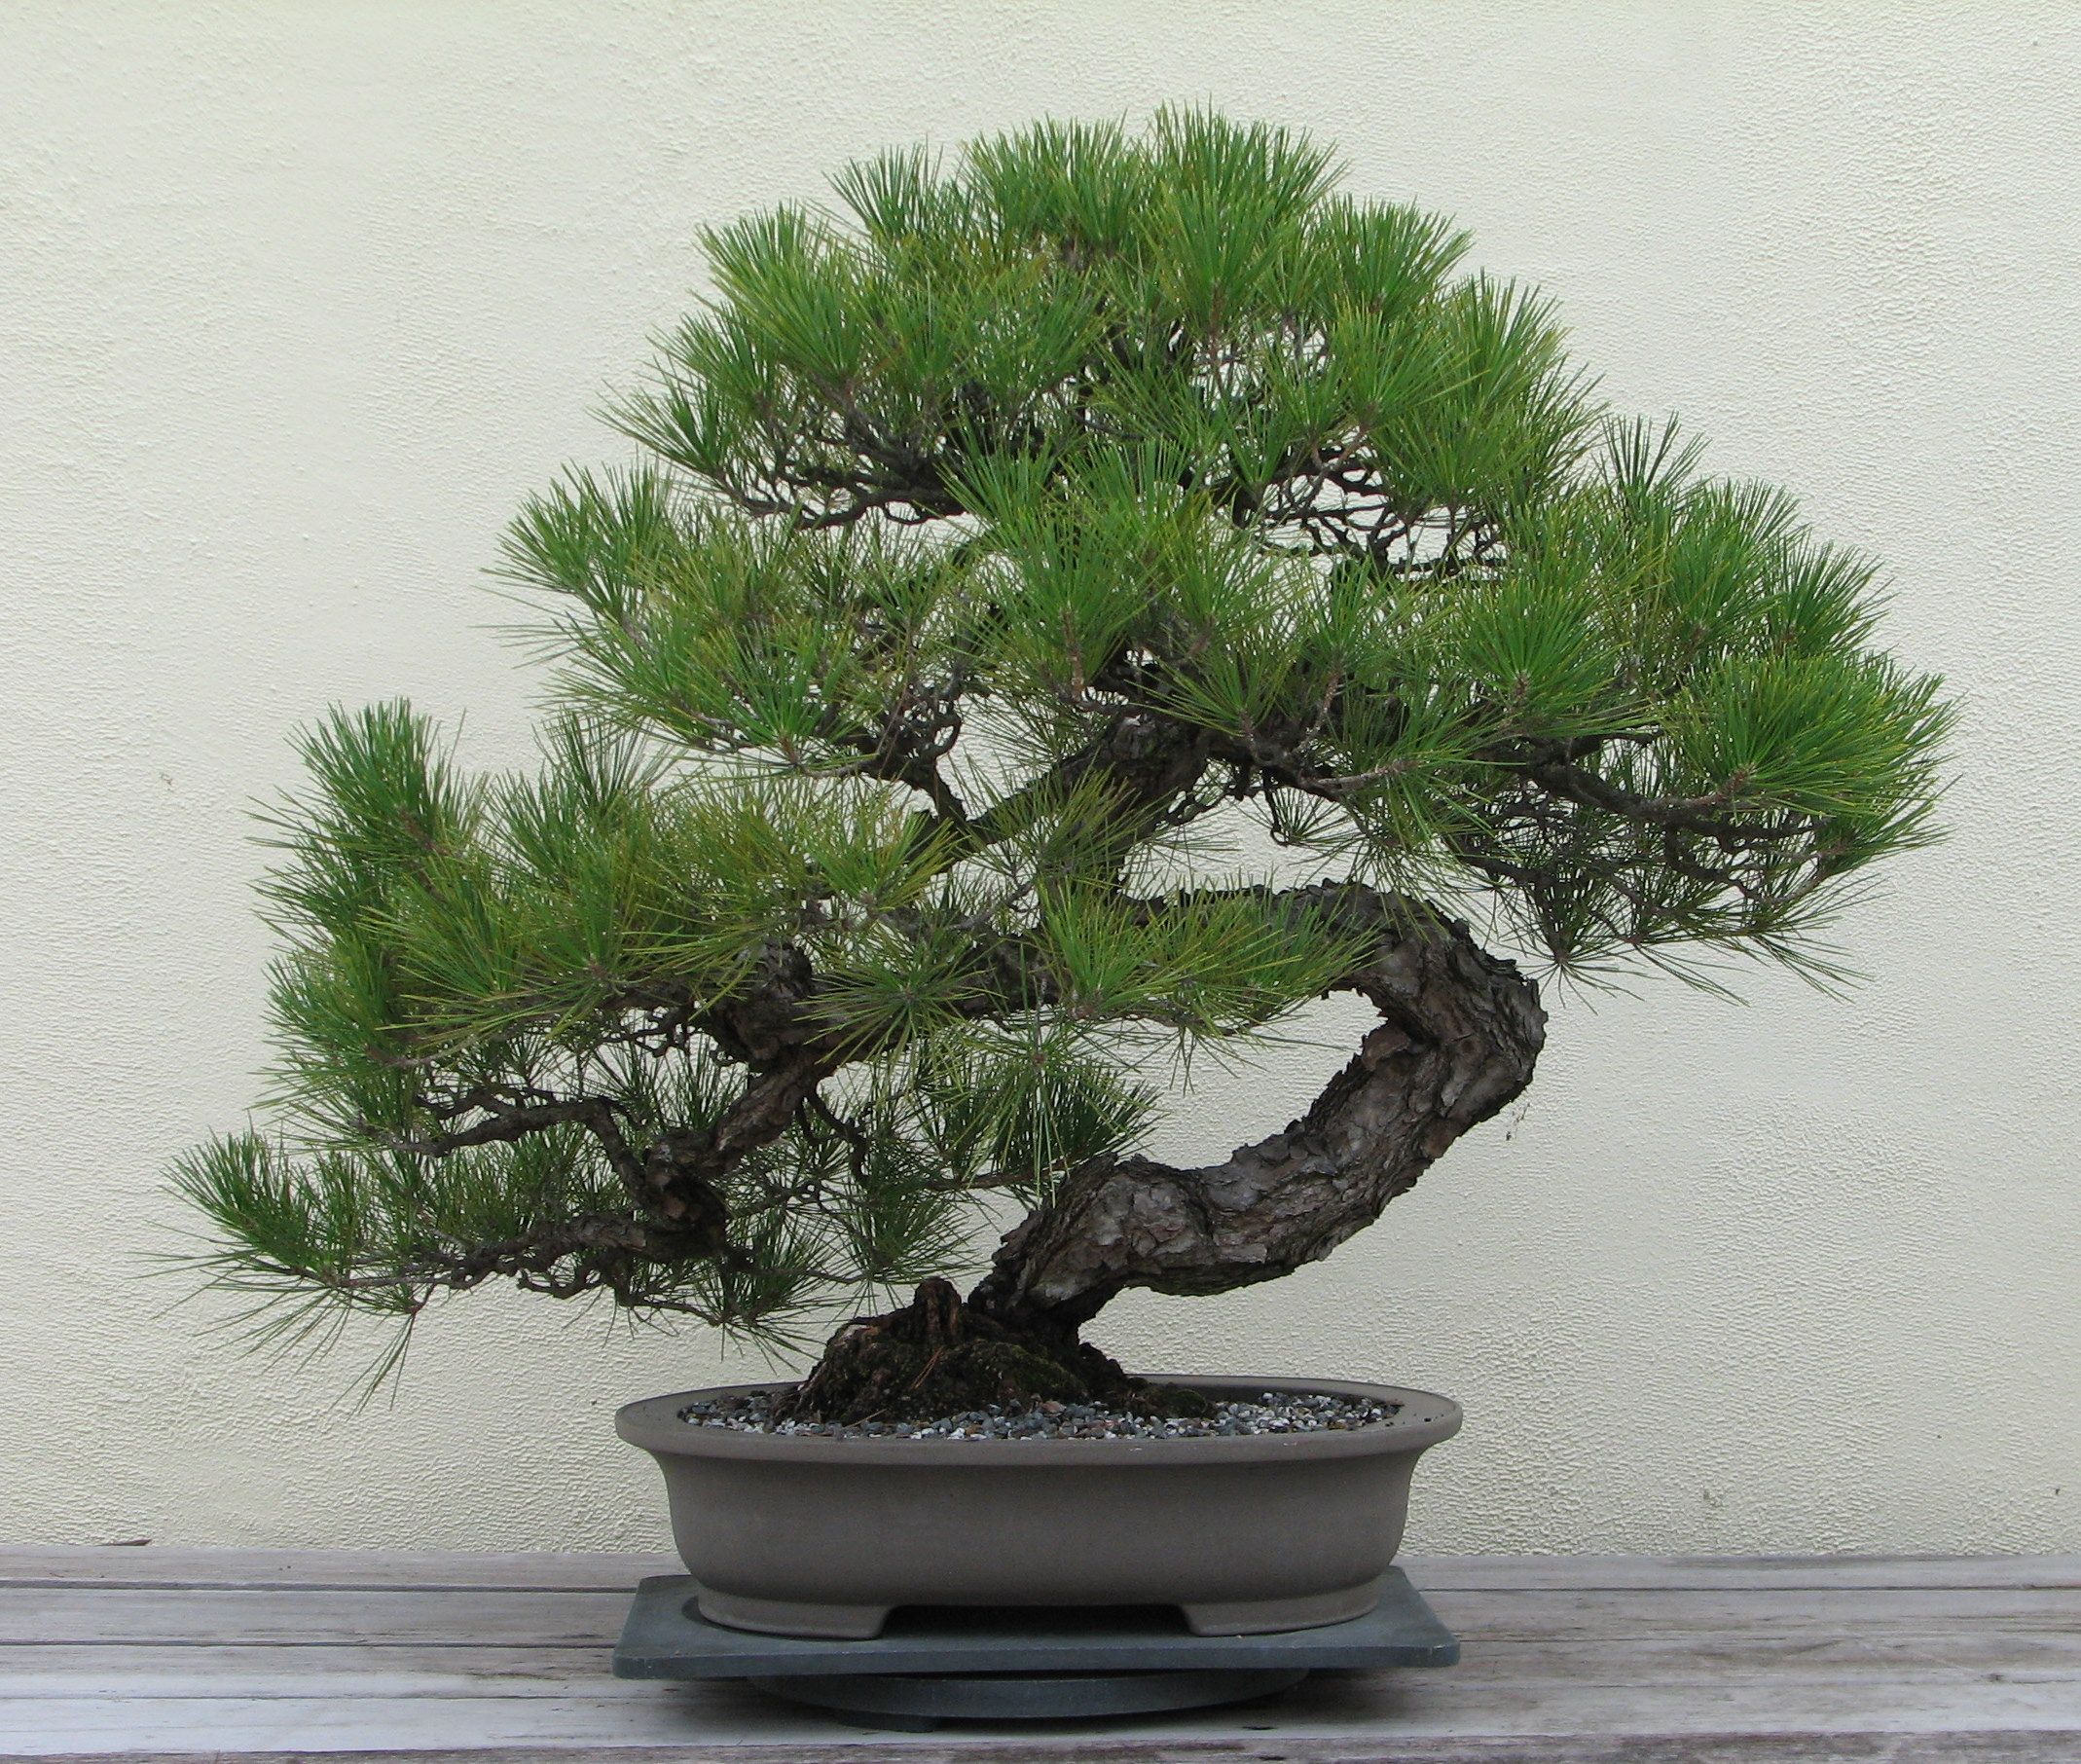 Japanese black pine tree - Pinus T. - bonsai plant | Bonsai, Black ...